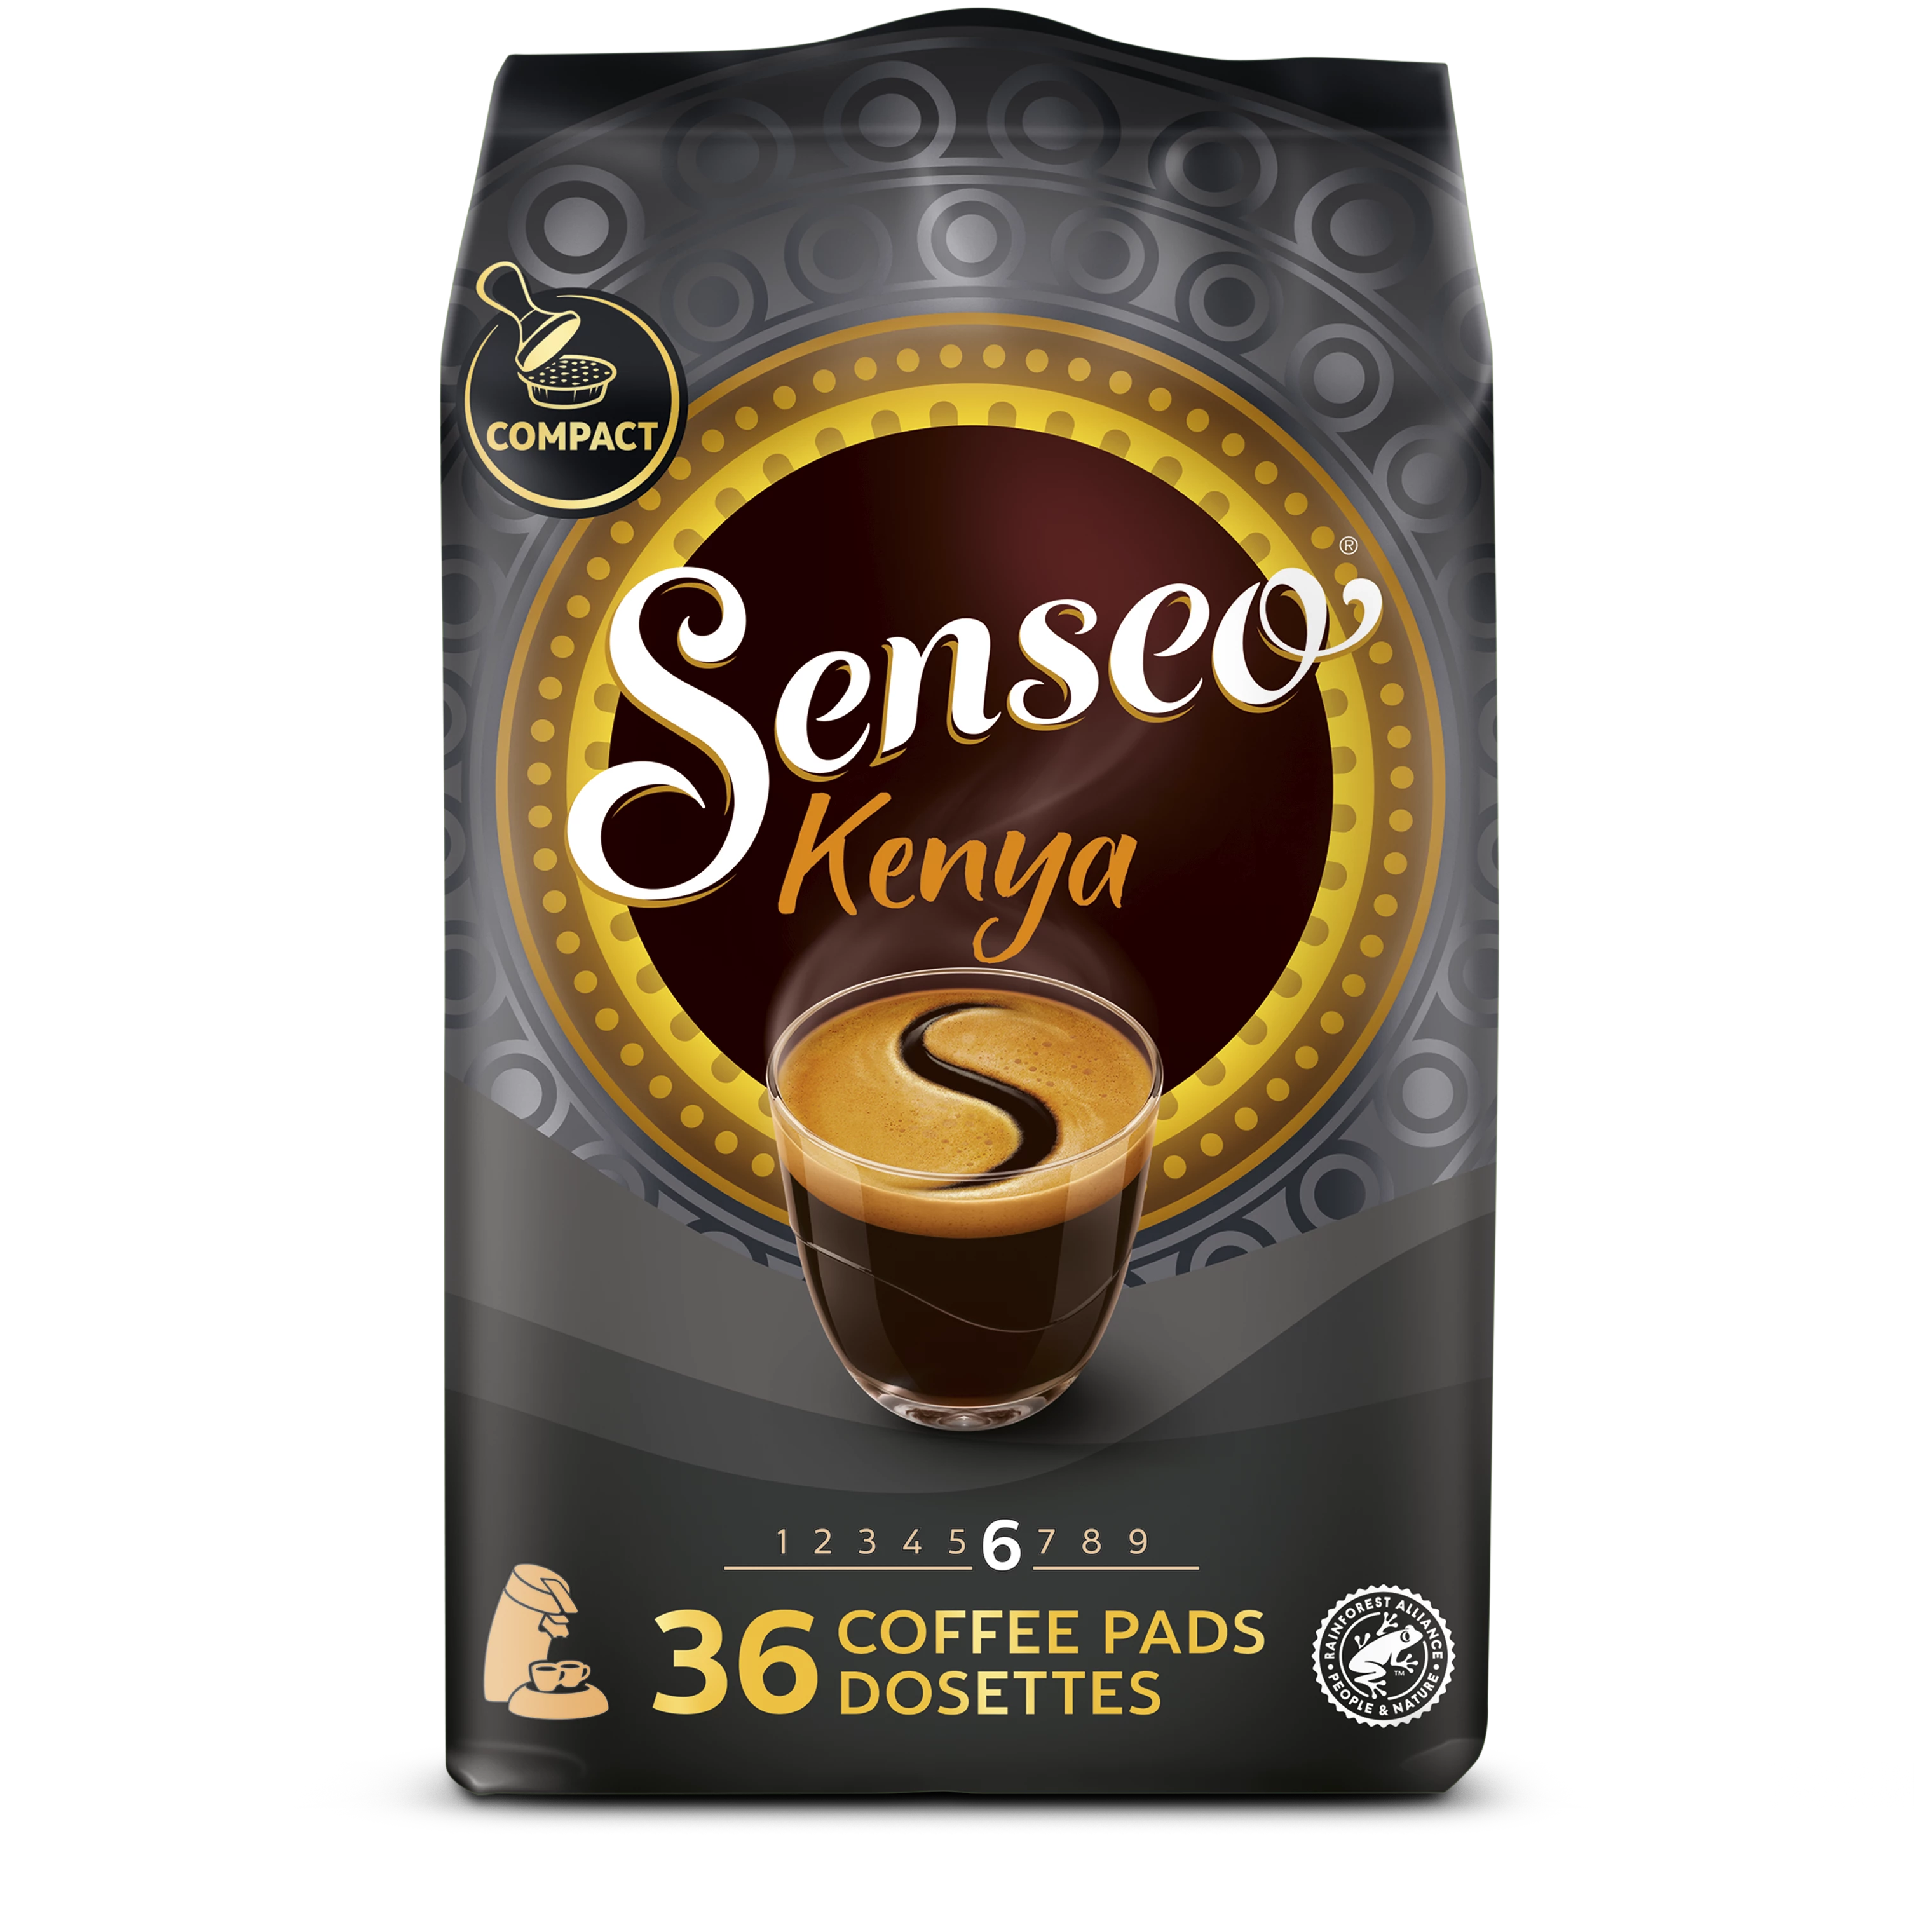 Senseo Kenya 36dosetts 250g